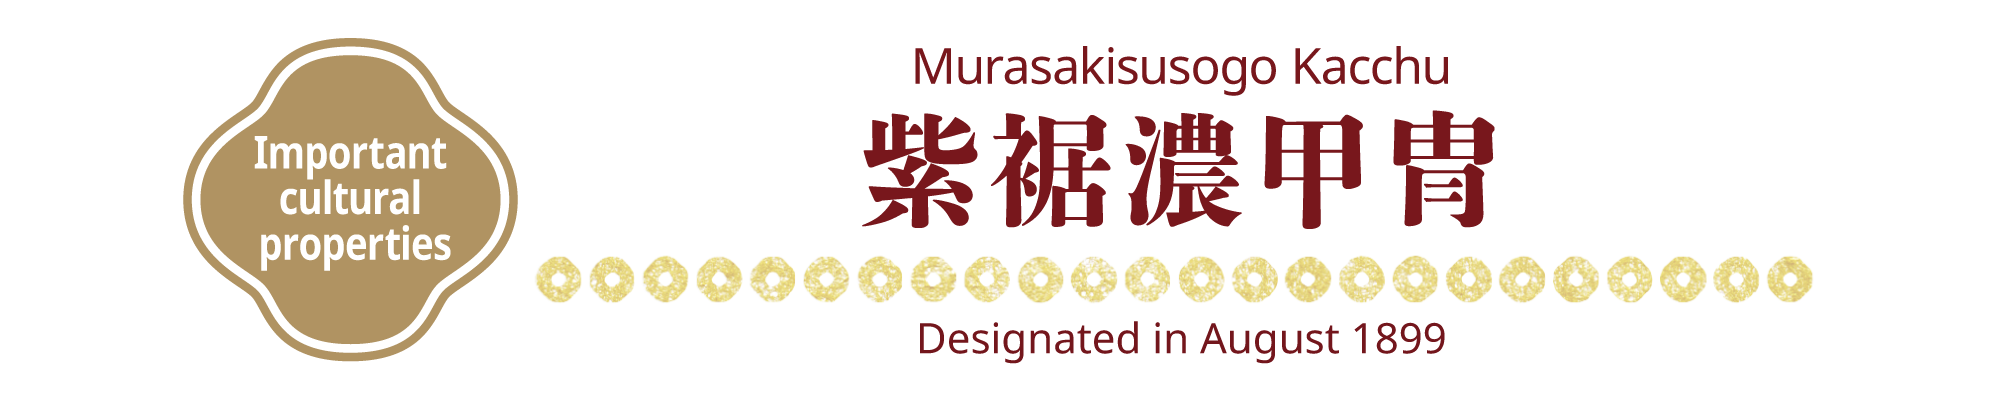 [Important cultural properties] Murasakisusogo Kacchu, Designated in August 1899